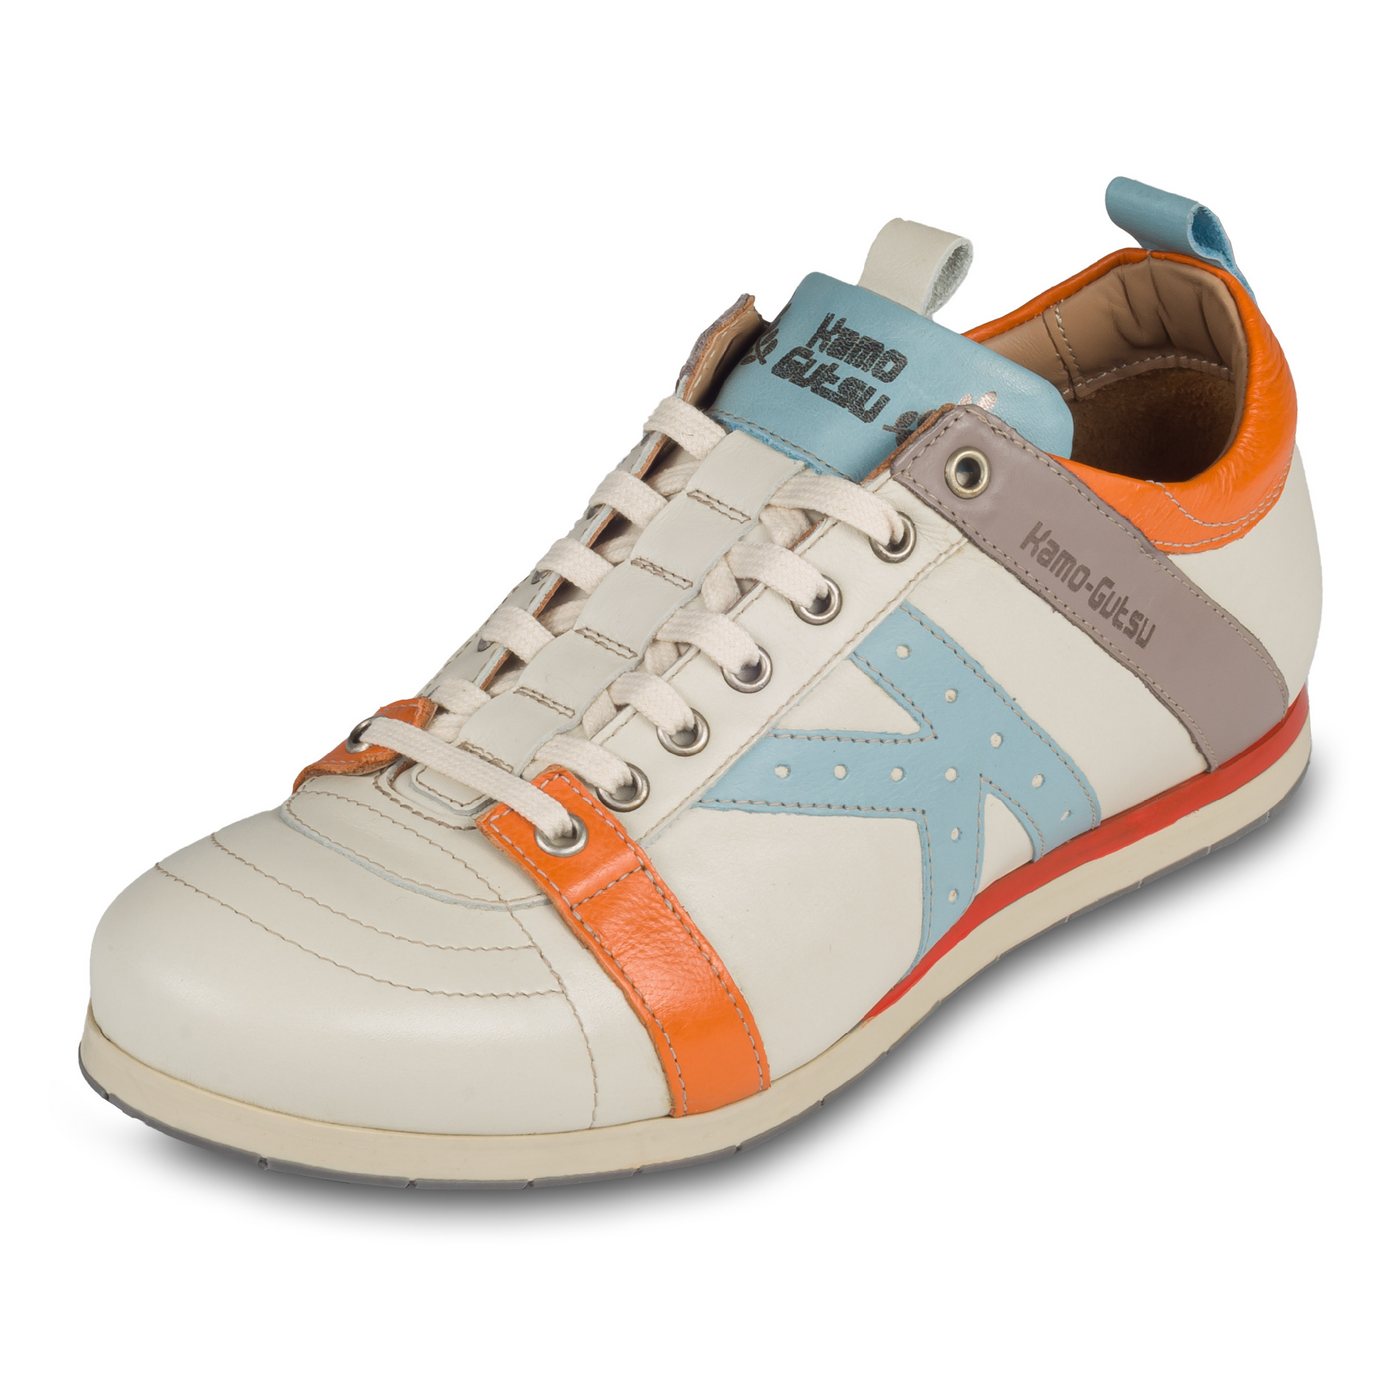 Kamo-Gutsu Leder Sneaker weiß / orange, blau, grau (TIFO-042 bianco + cielo weiß) Sneaker Handgefertigt in Italien von Kamo-Gutsu